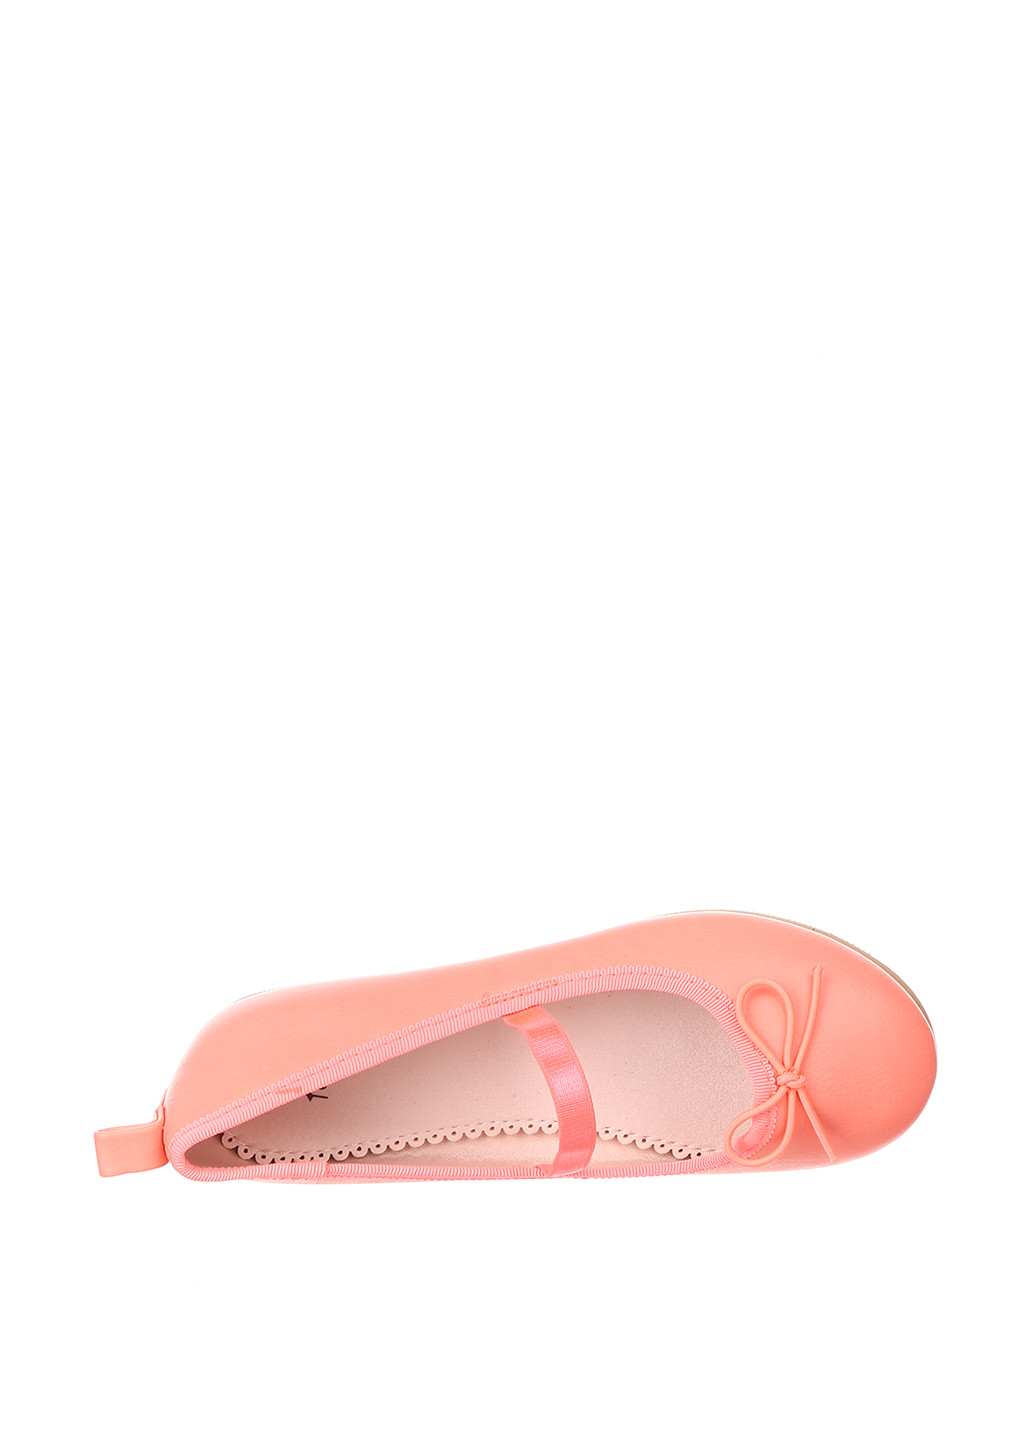 Розовые туфли на низком каблуке H&M